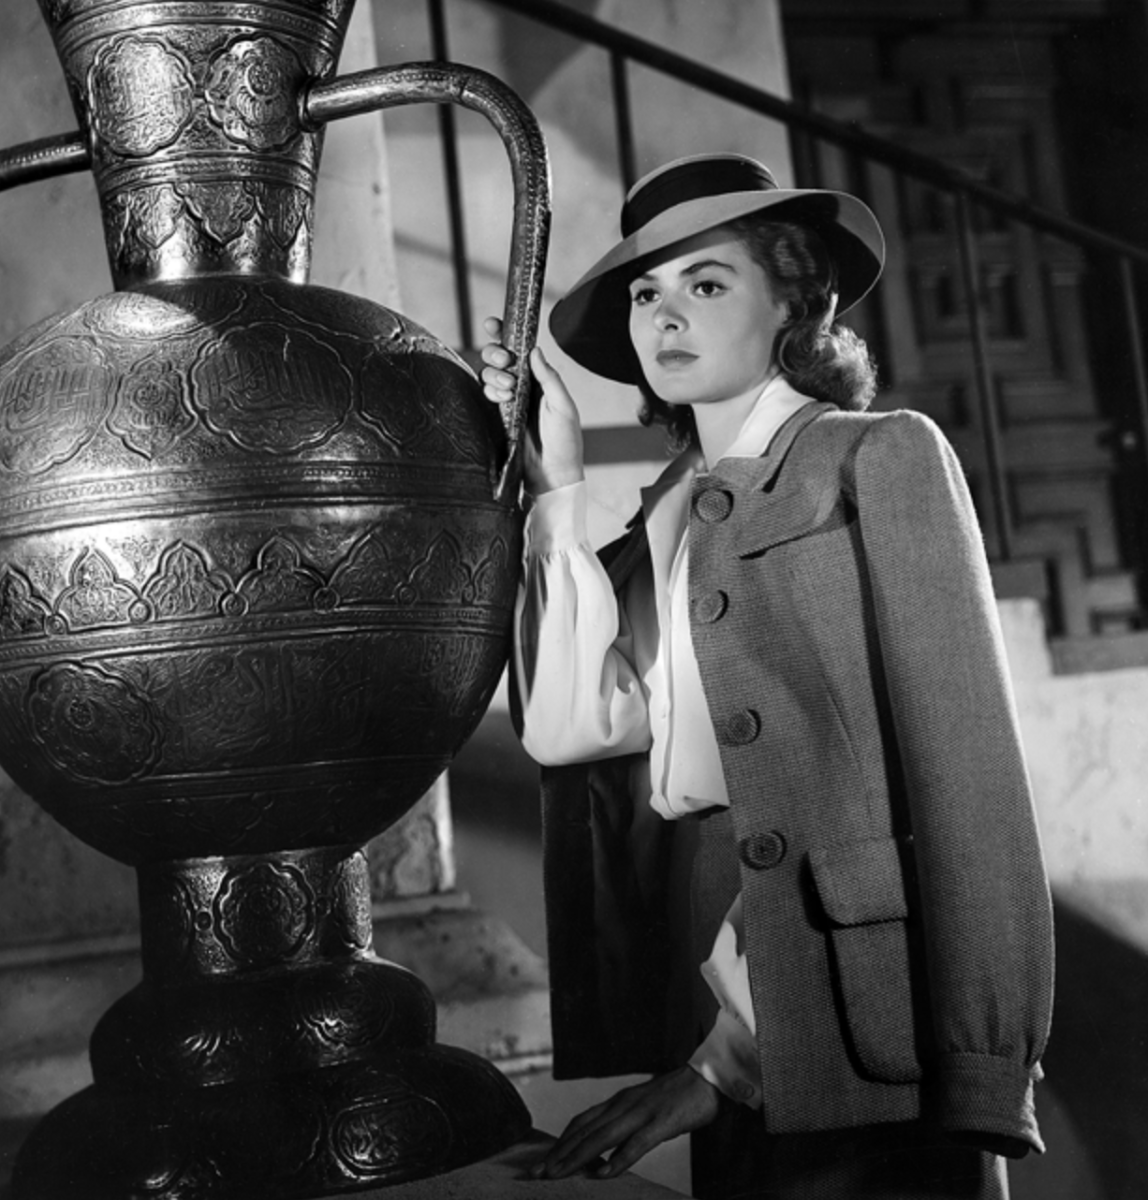 Ingrid Bergman as Ilsa Lund from Casablanca